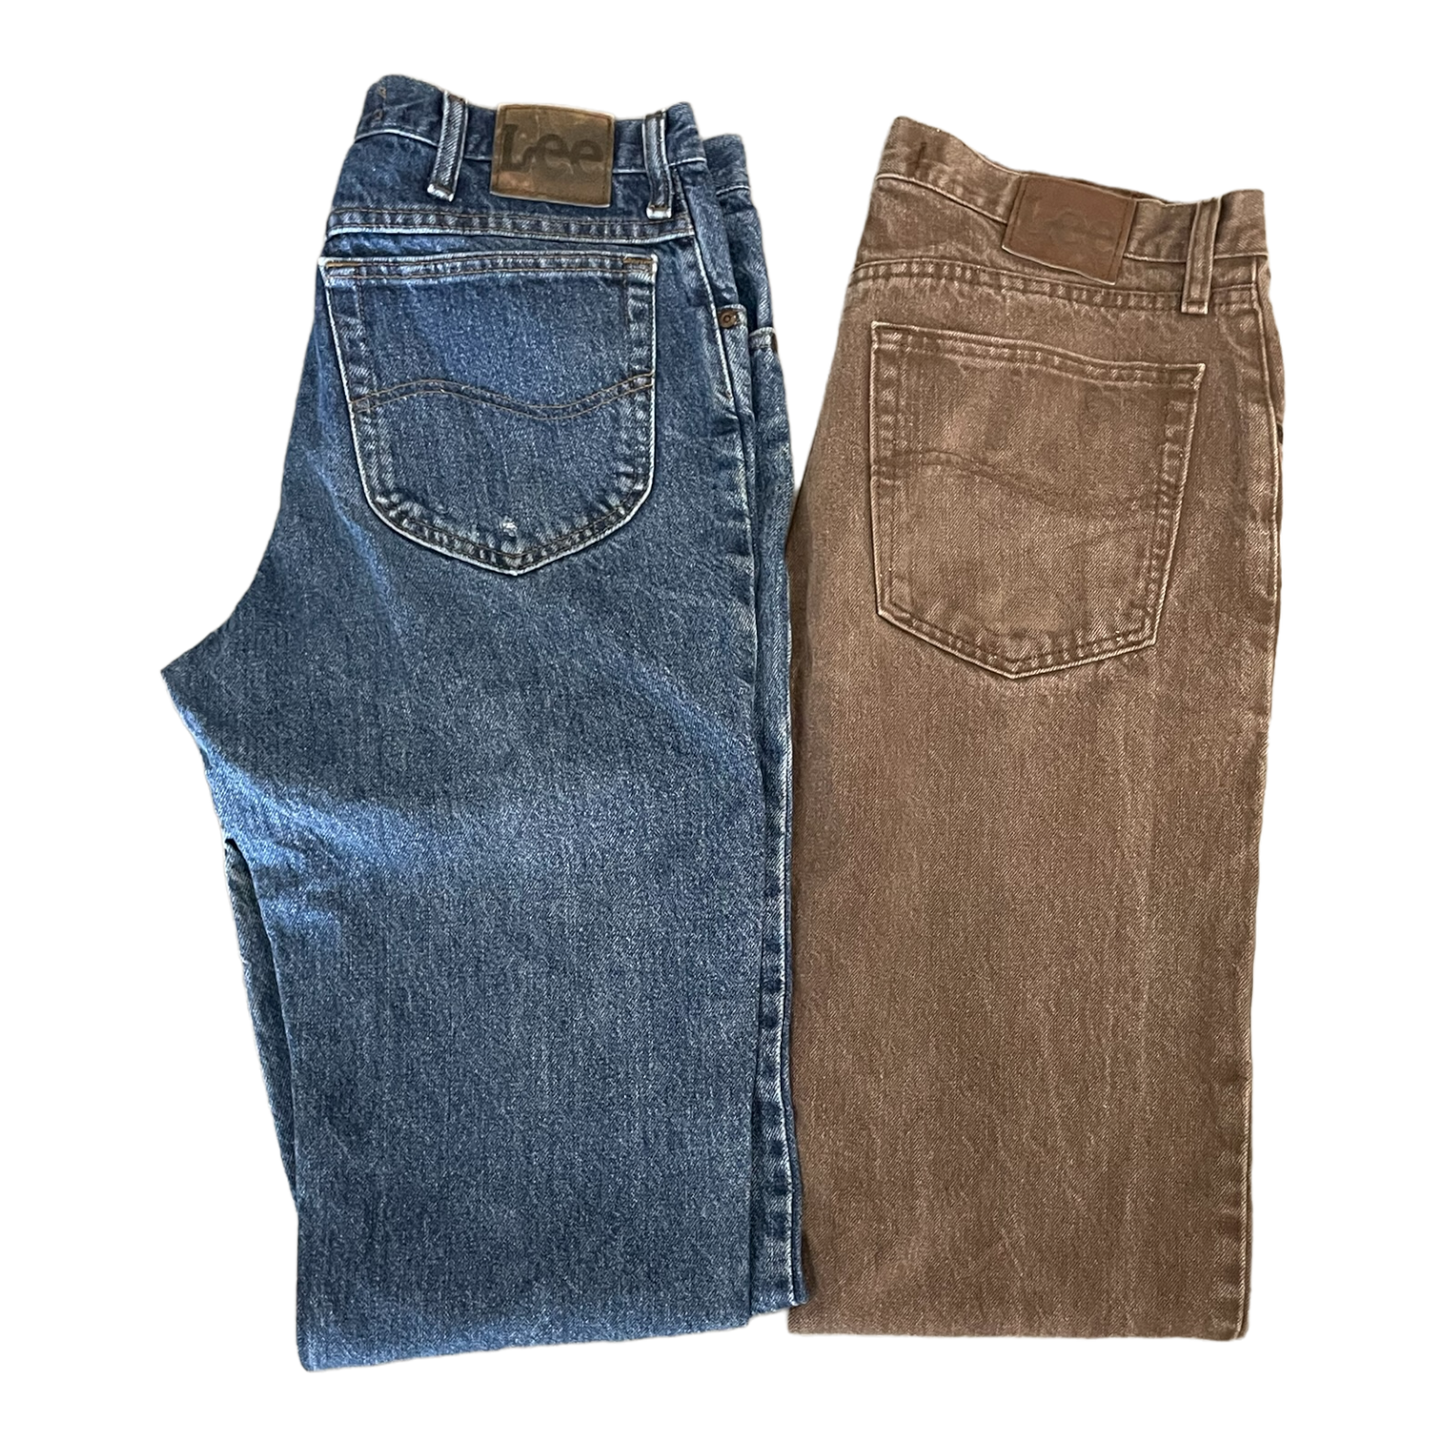 Men's Lee Jeans Intro Pack